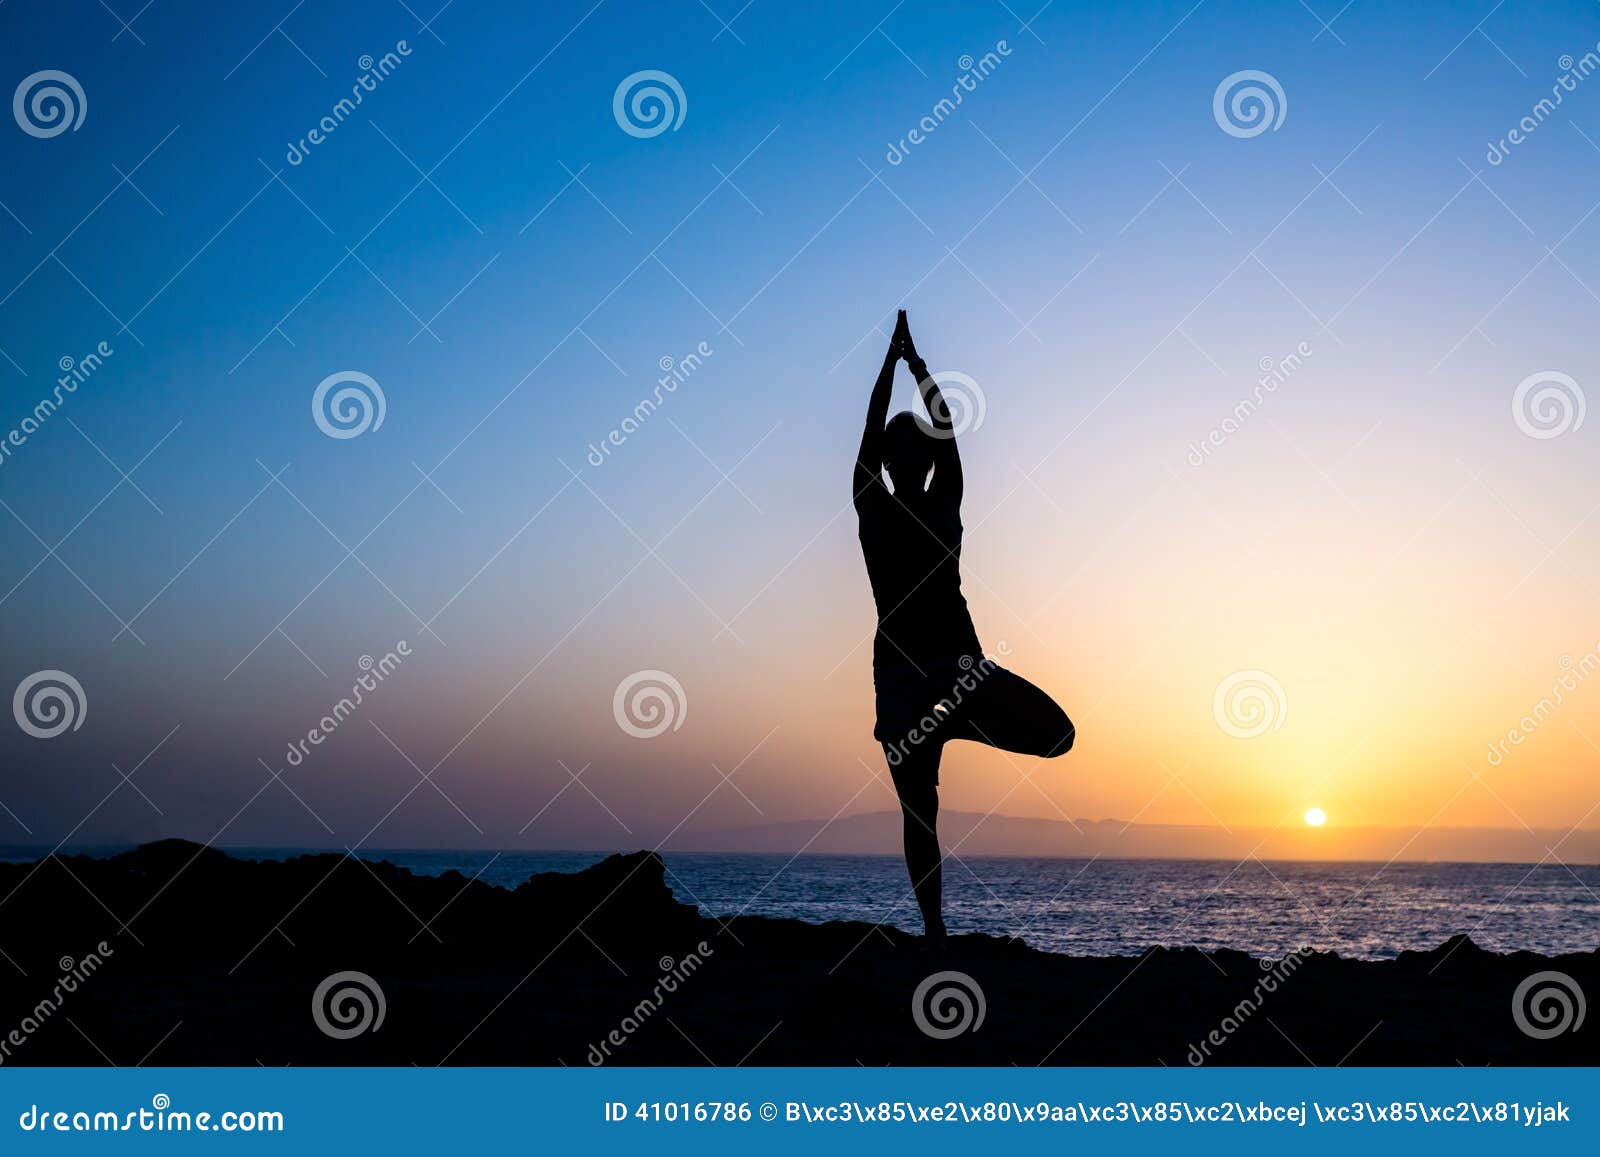 Young beautiful female doing yoga tree pose